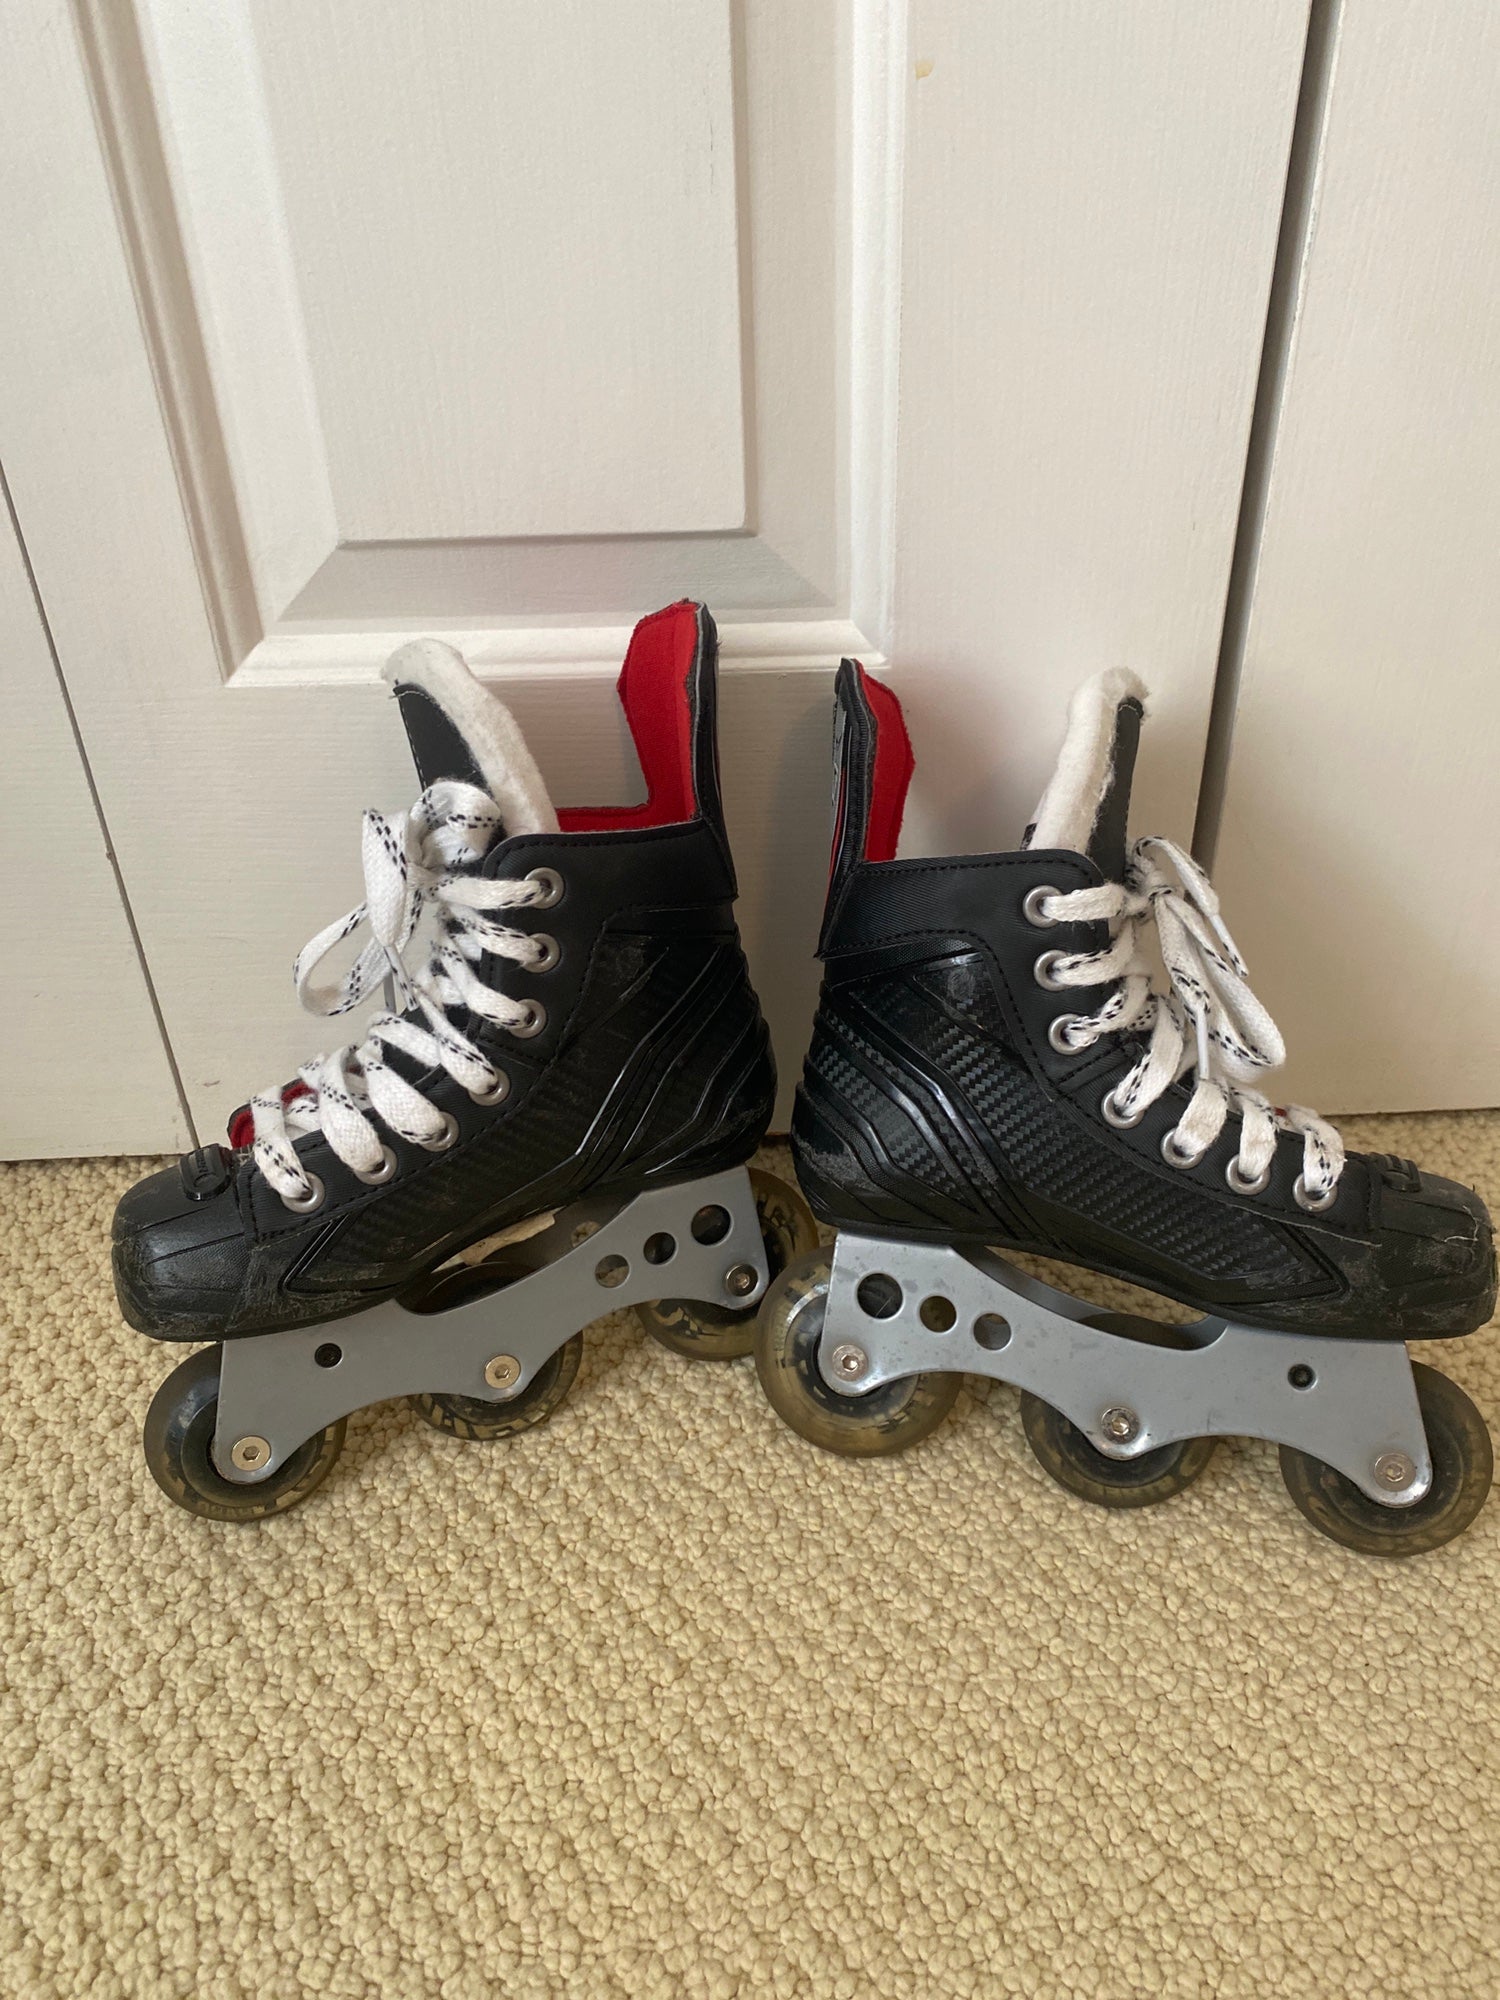 Used Bauer Width Size 11 Skates | SidelineSwap